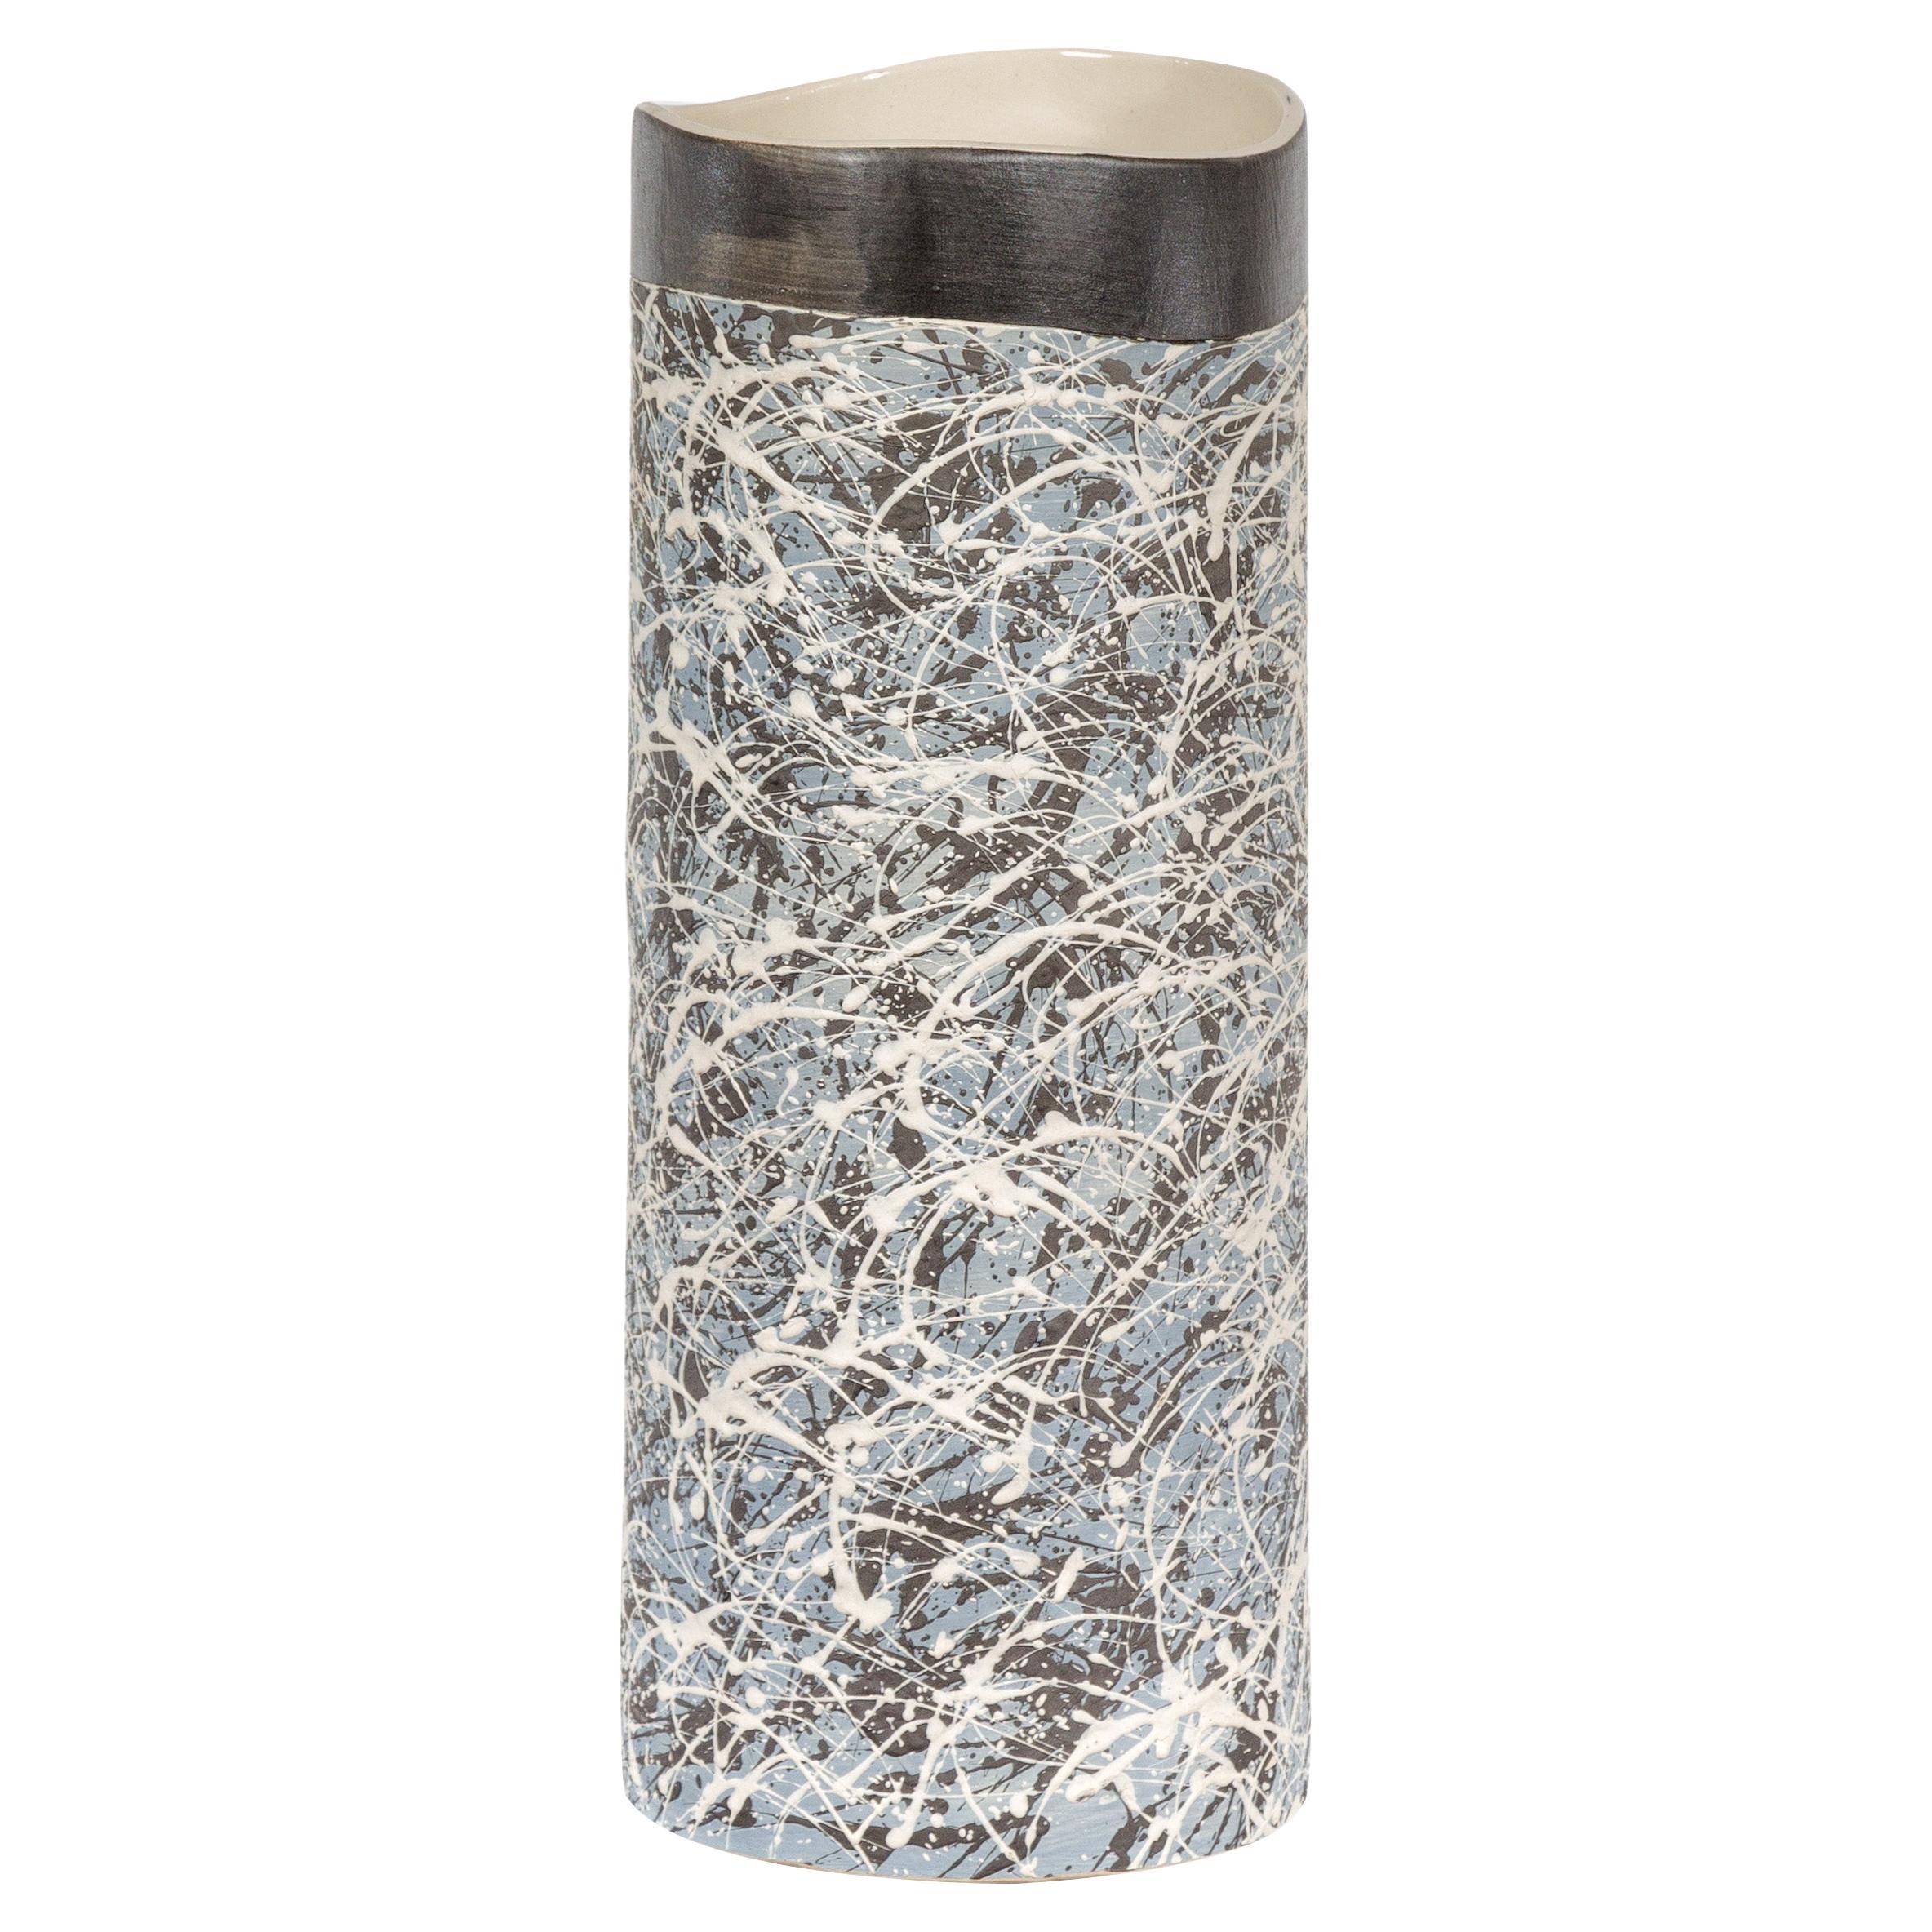 Textured Blue Gray, White, Brown and Black Spattered Ceramic Vase